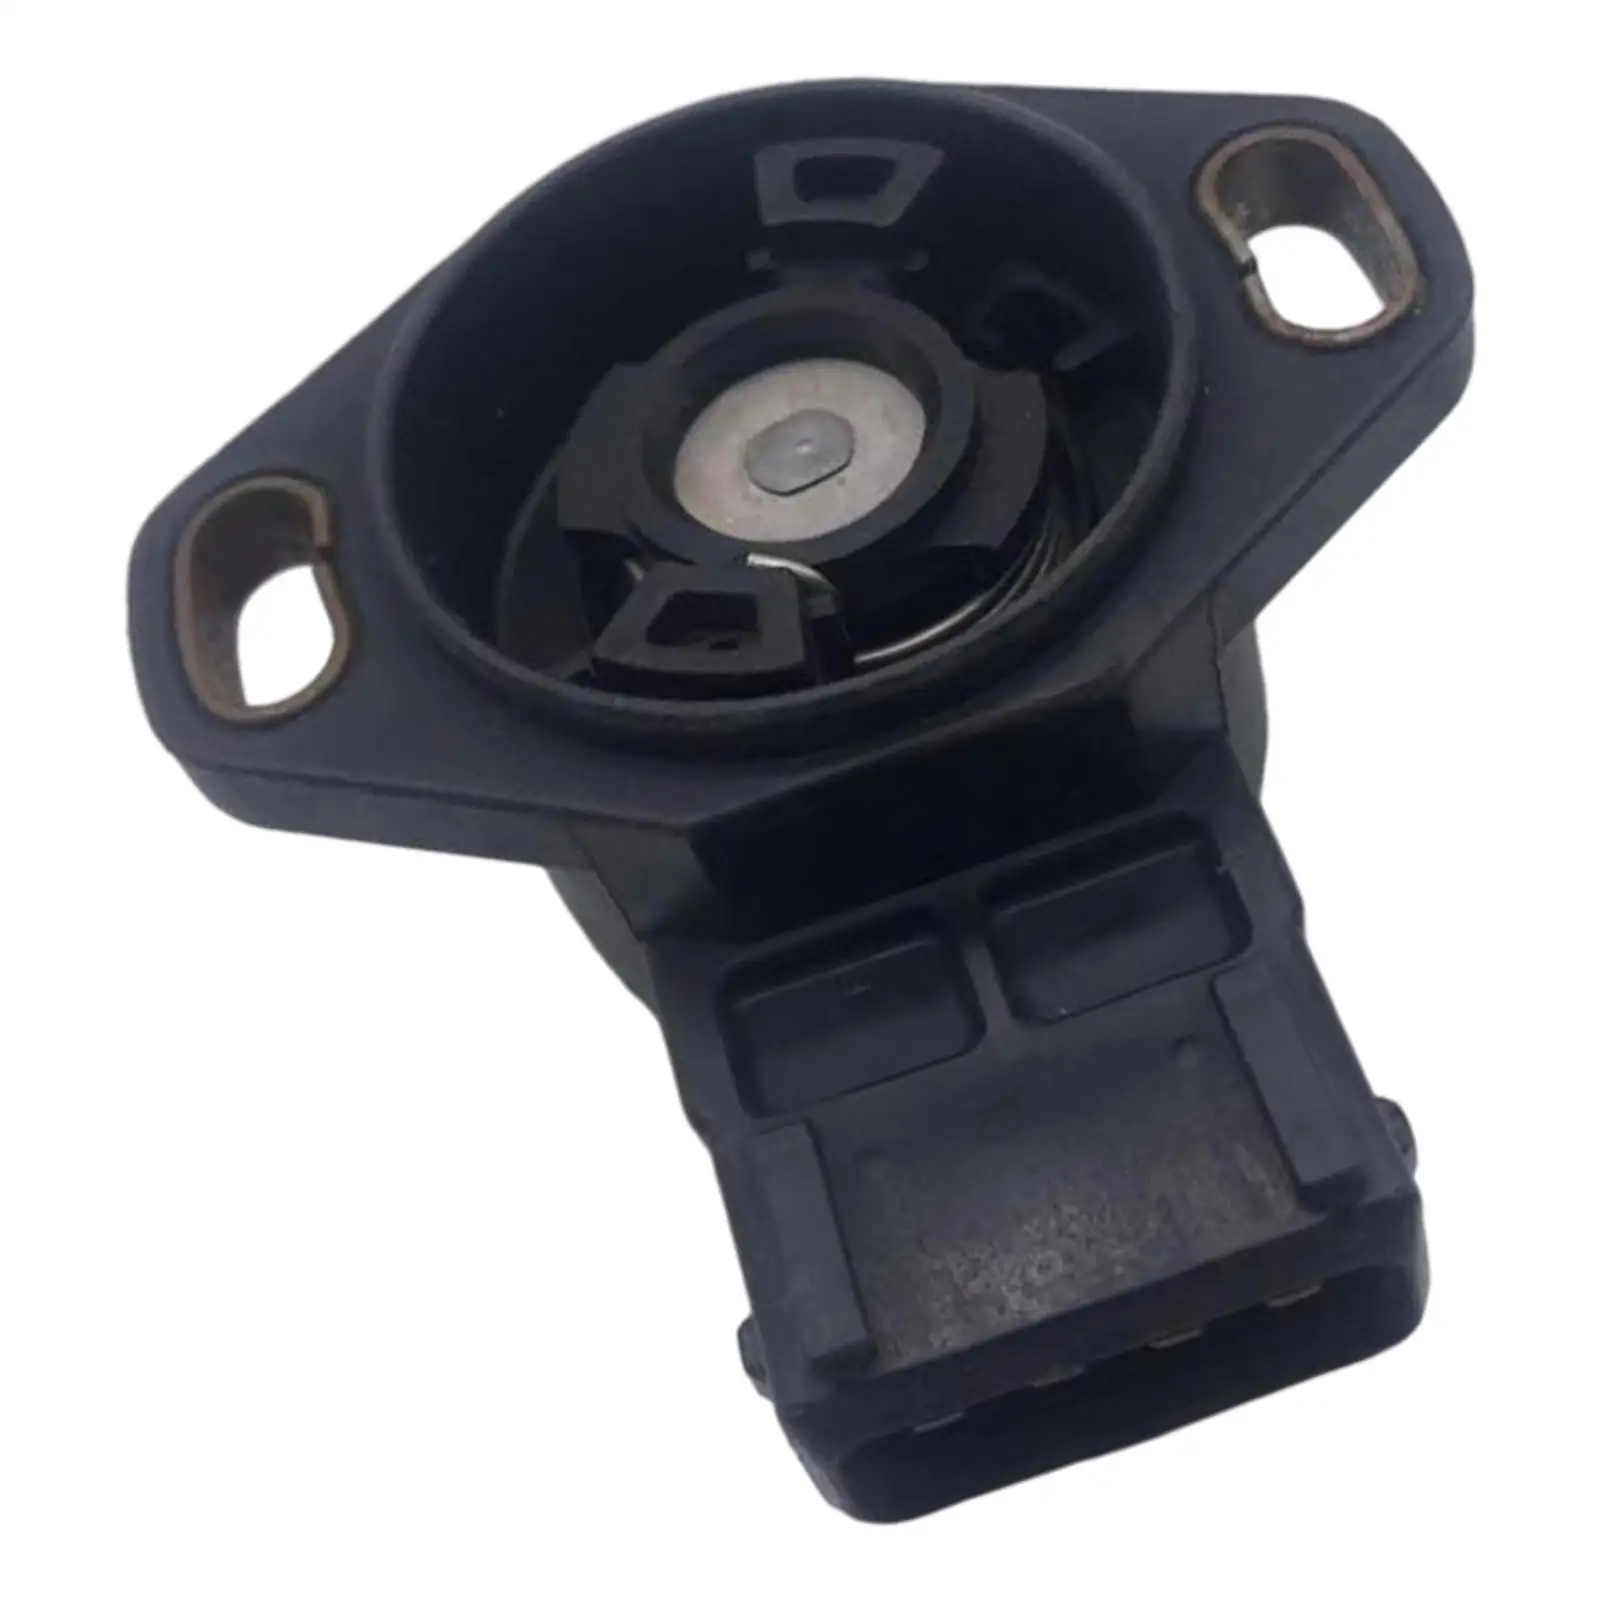 Throttle Position Sensor Fit for Sta FE XG350 Amanti 01-06 35102-3B000 MD614697